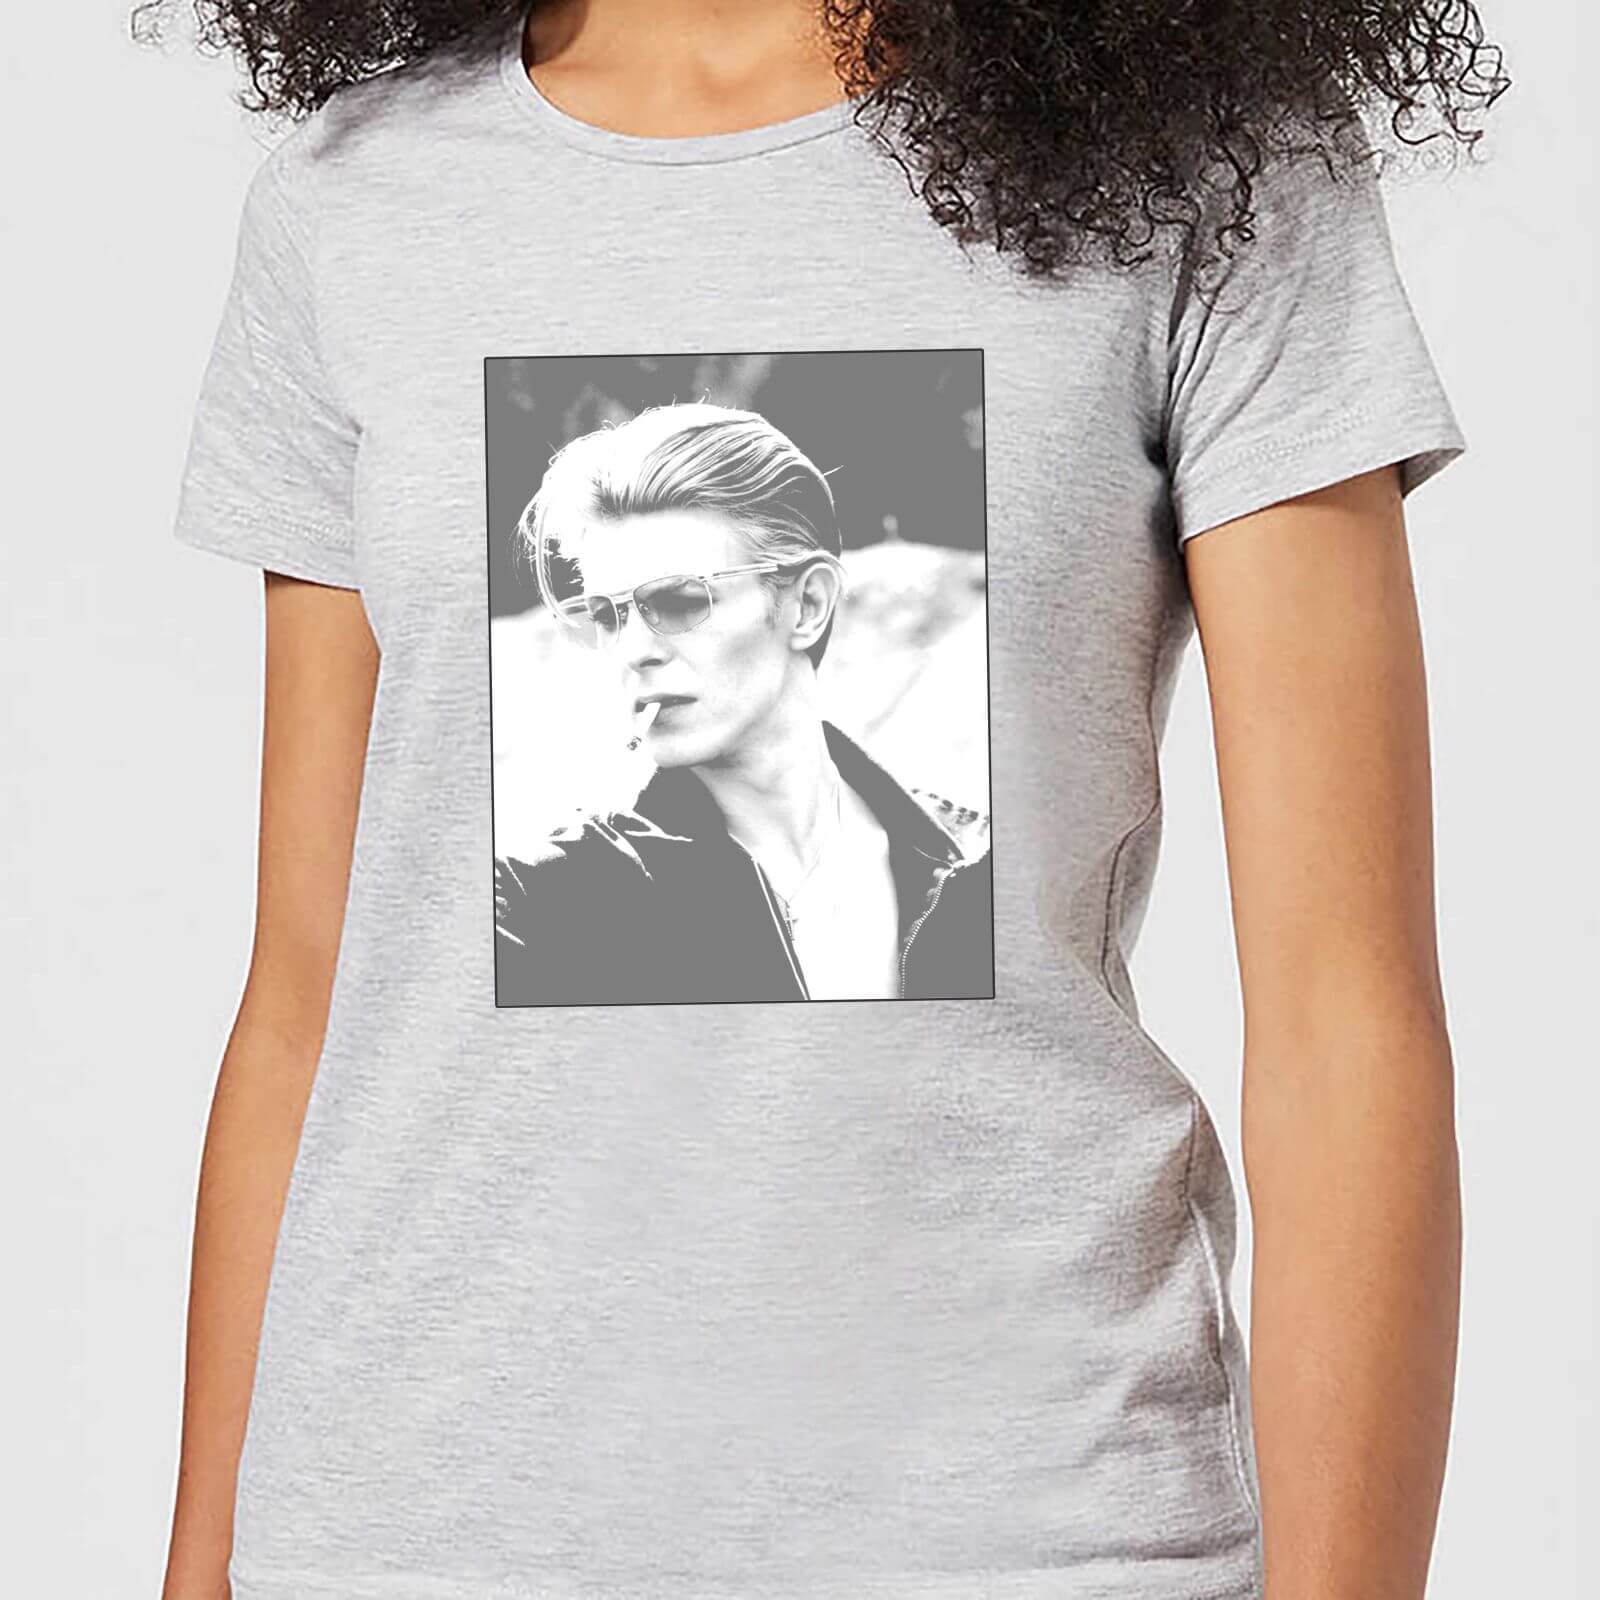 David Bowie Wild Profile Framed Women's T-Shirt - Grey - M - Grey